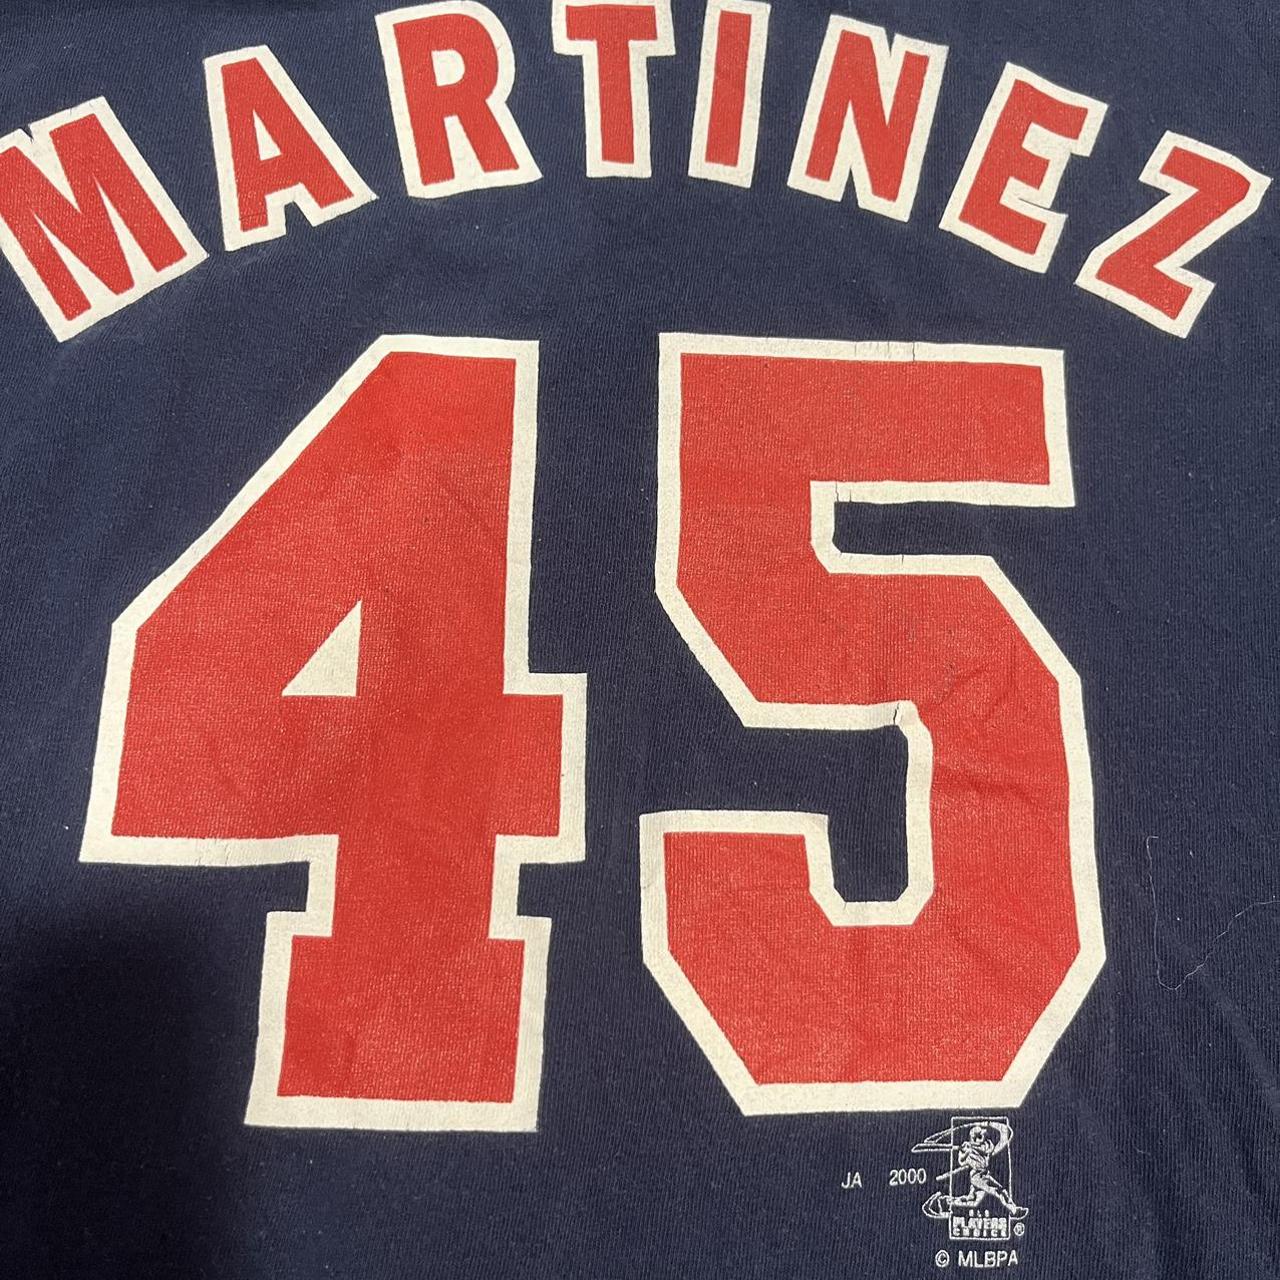 Pedro Martinez 45 Youth T Shirt Size L MLB Boston Red Sox Long